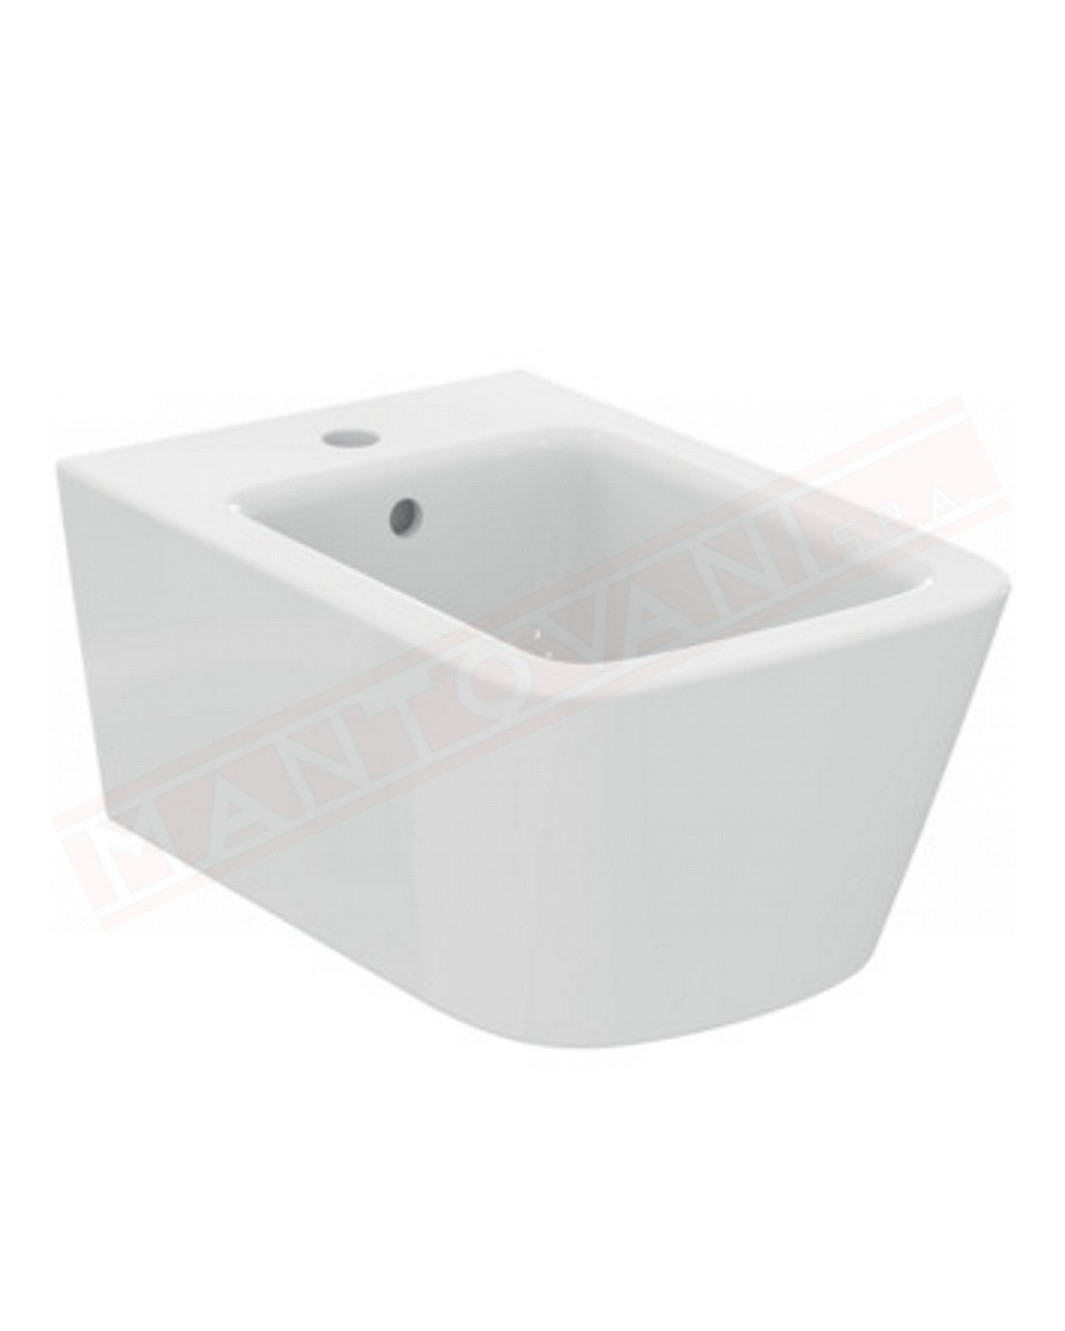 Blend Cube bidet sospeso Ideal Standard bianco lucido 54x36